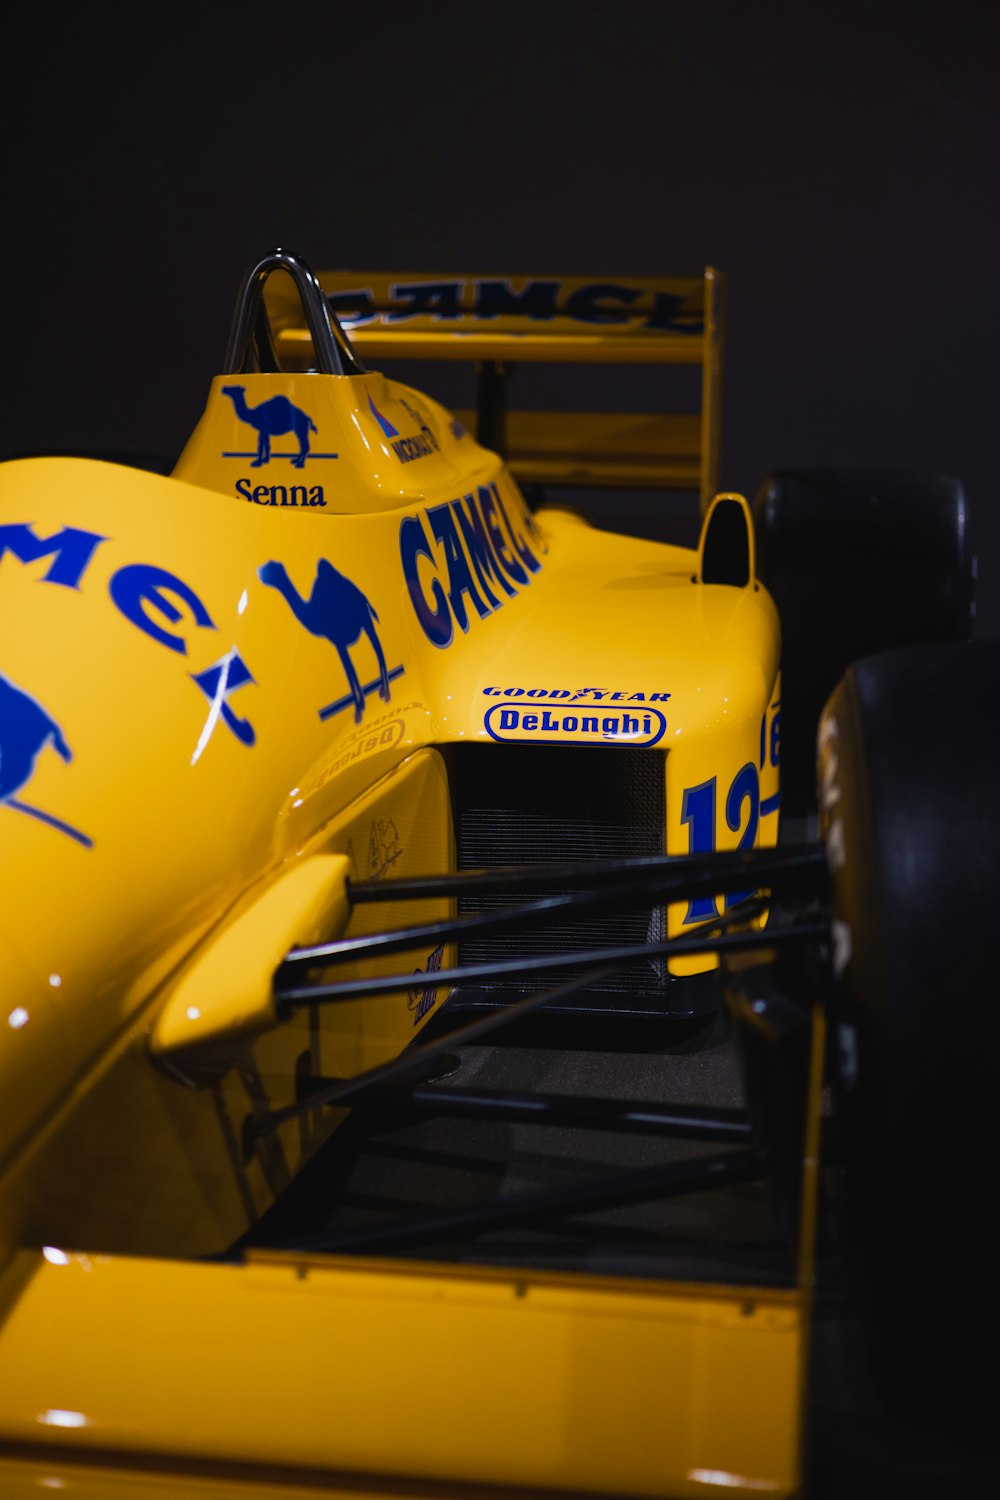 a close up of a yellow race car